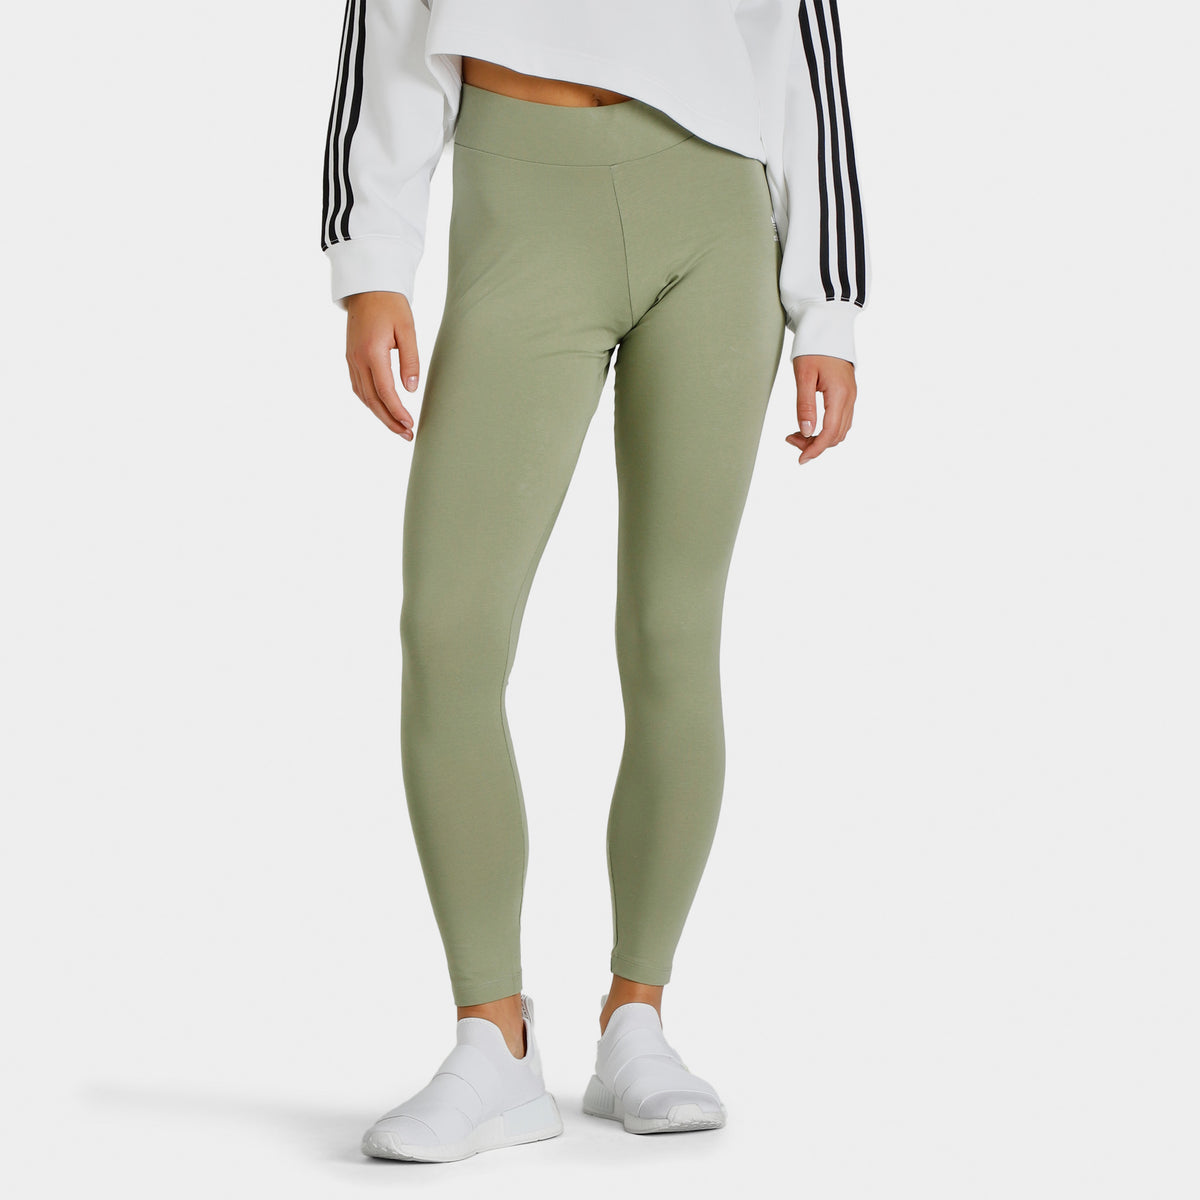 adidas Women's Tights / Tent Green